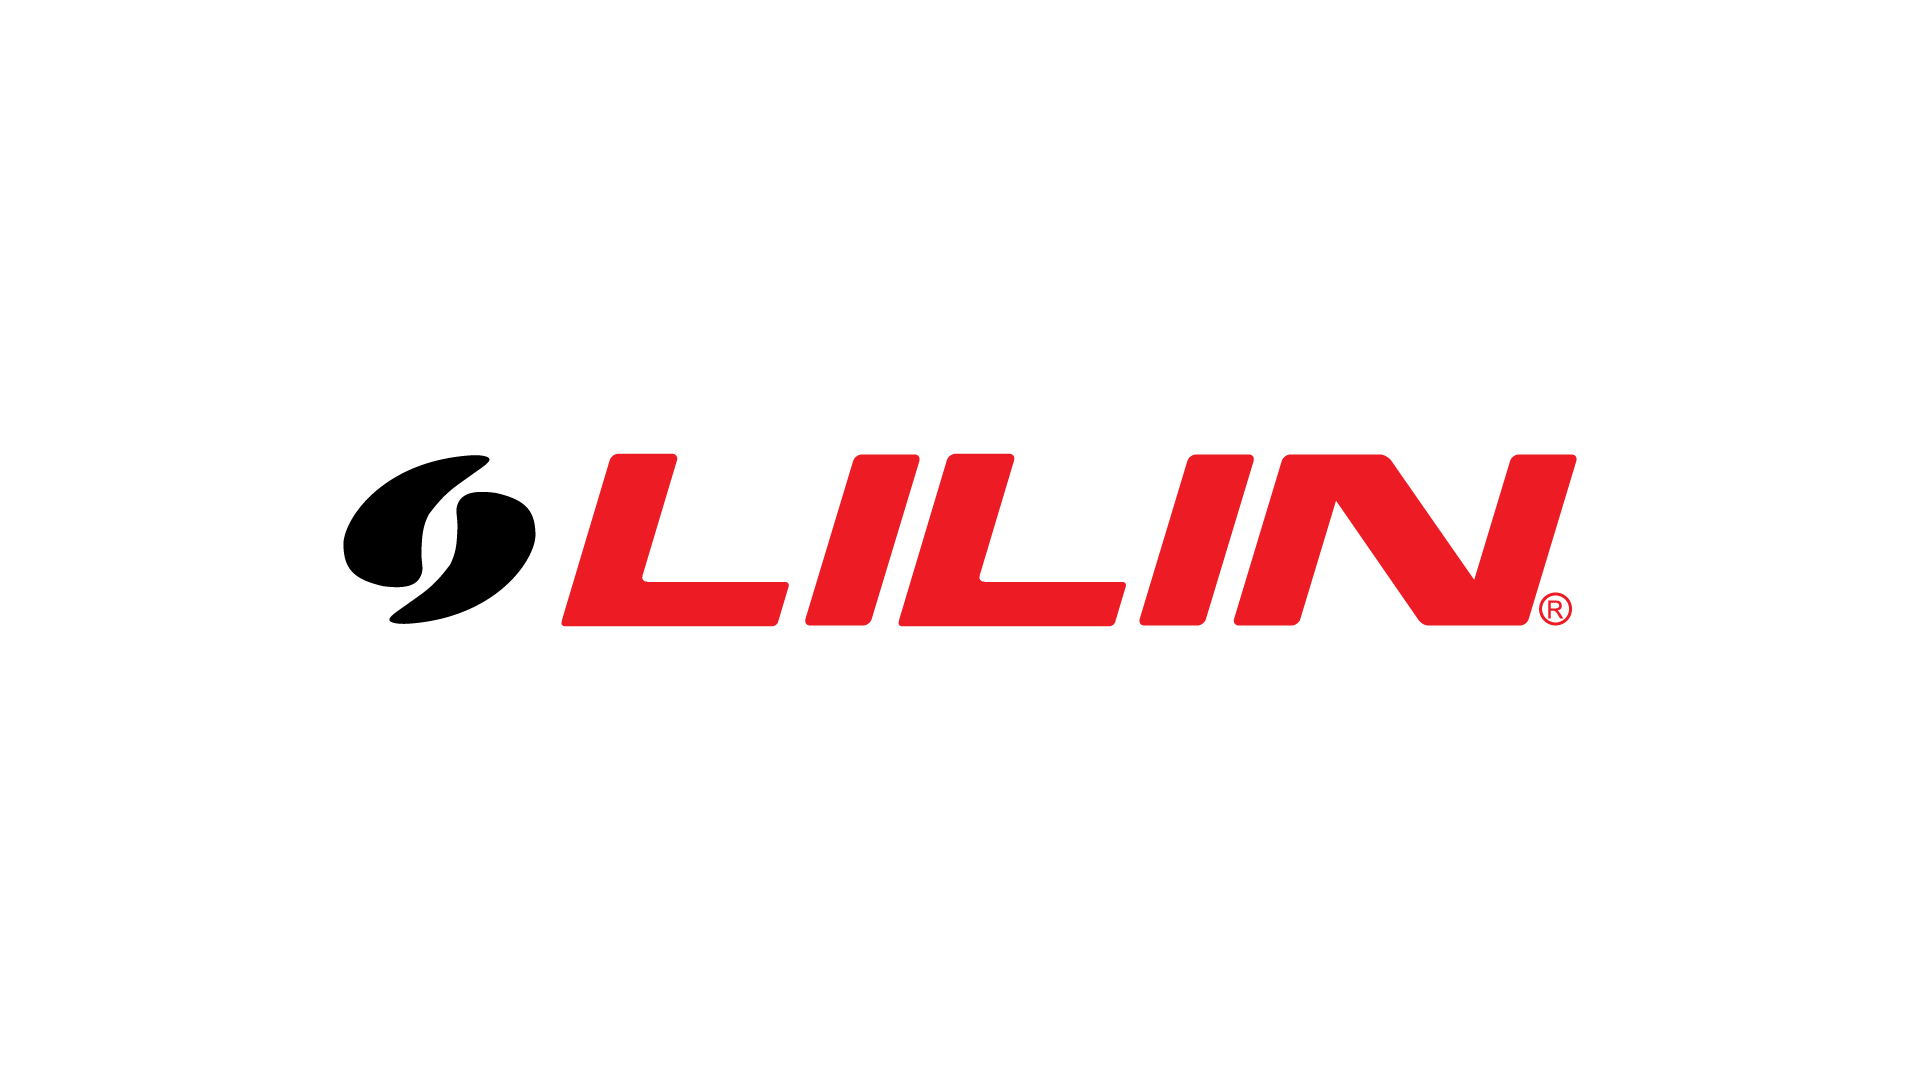 Lilin